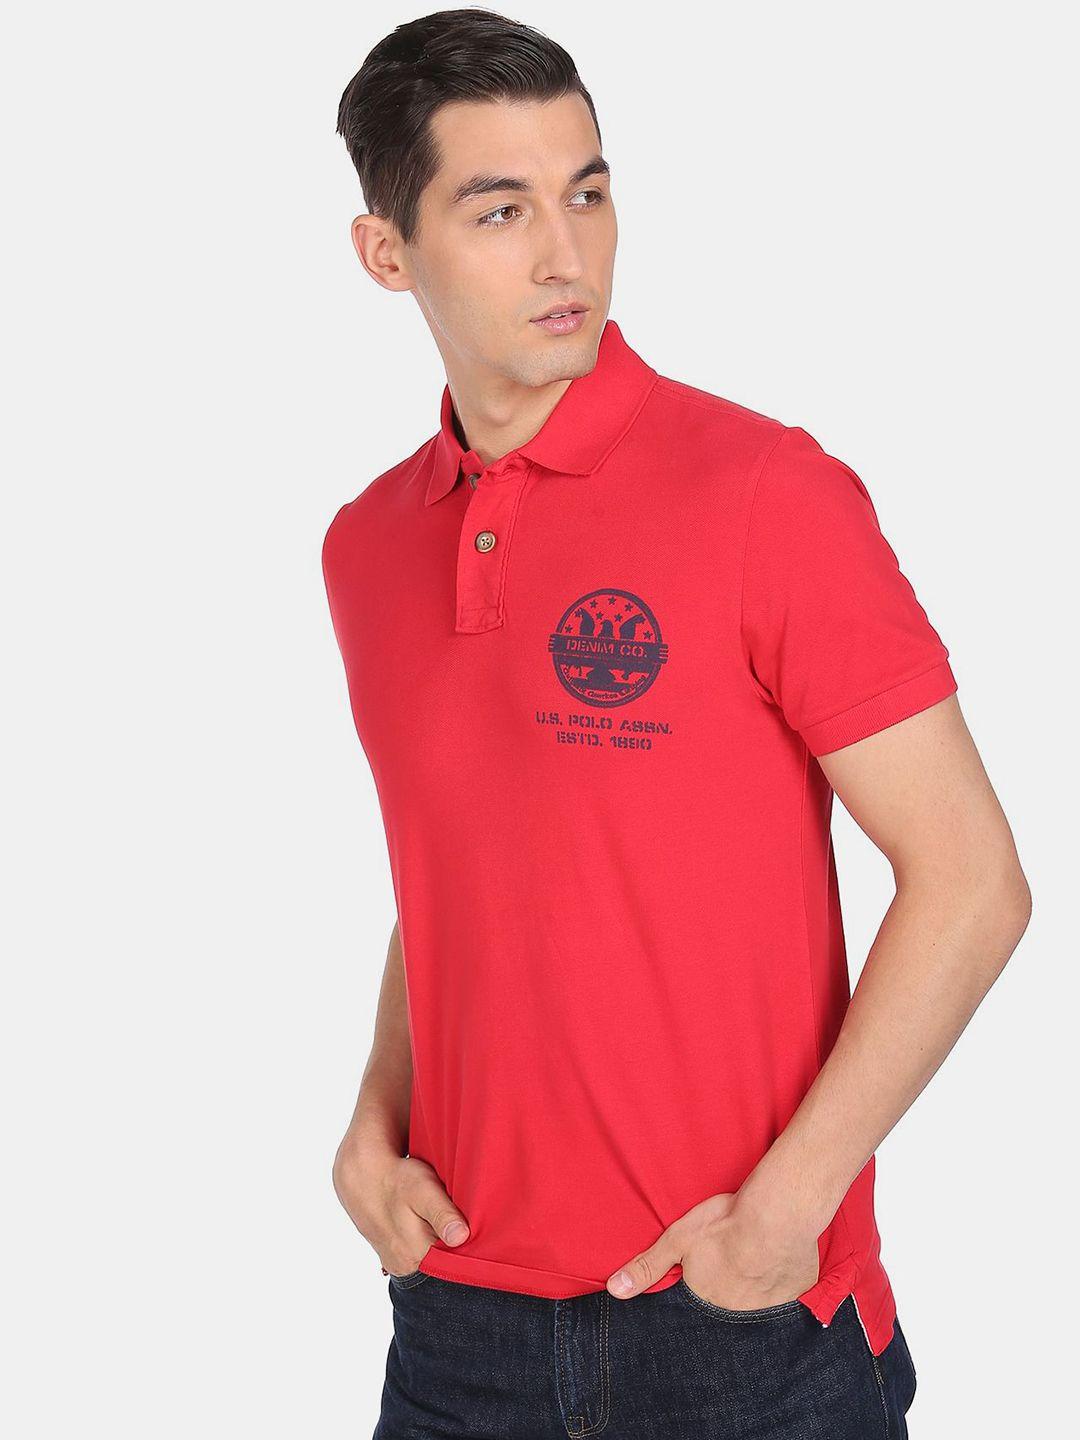 u.s. polo assn. denim co. men red typography printed t-shirt